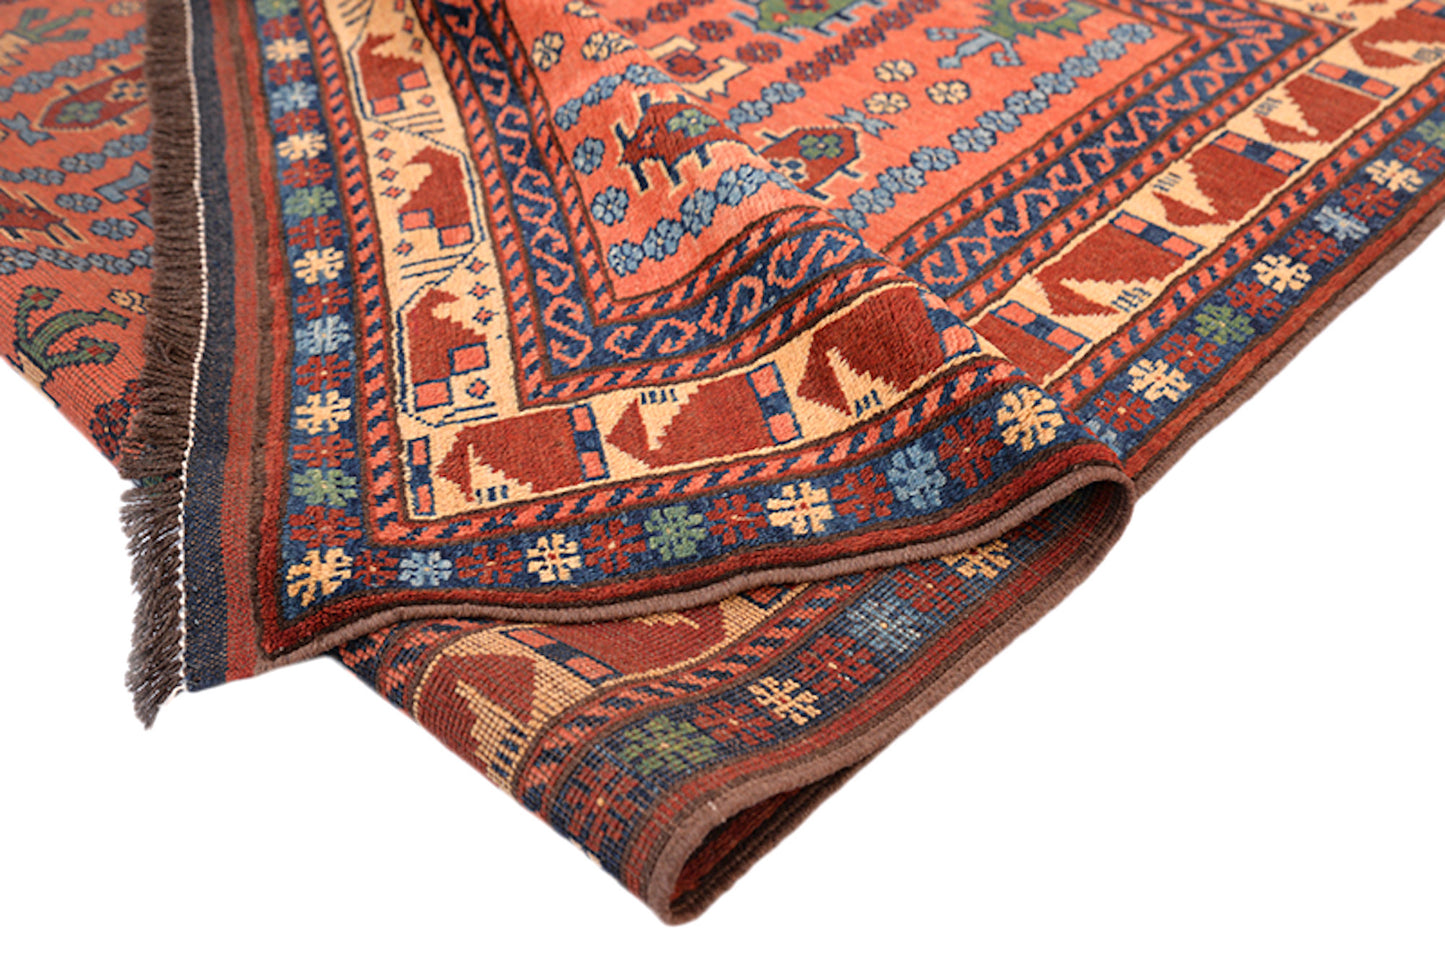 6 x 6 Coral Orange Red Handmade Rug | Square Turkish Caucasian Tribal | Living Room Accent Geometric Pattern Wool Rug